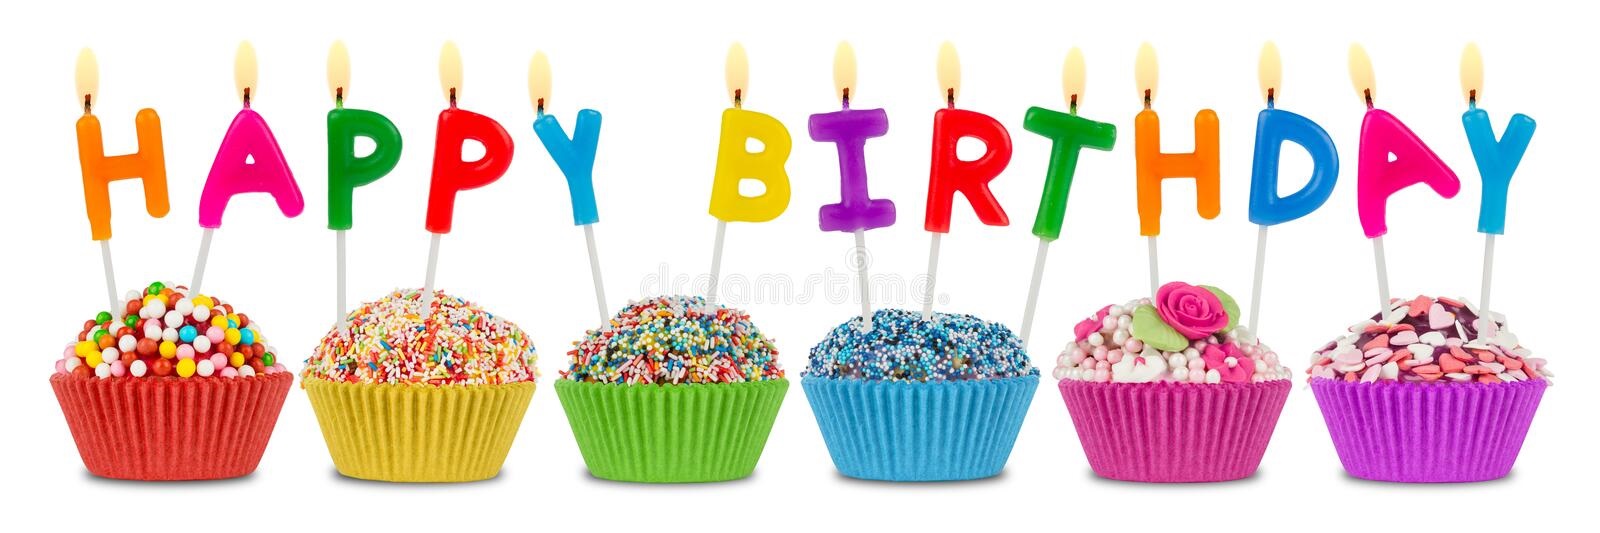 image-951742-happy-birthday-cupcakes-row-lettering-35361579-e4da3.jpg